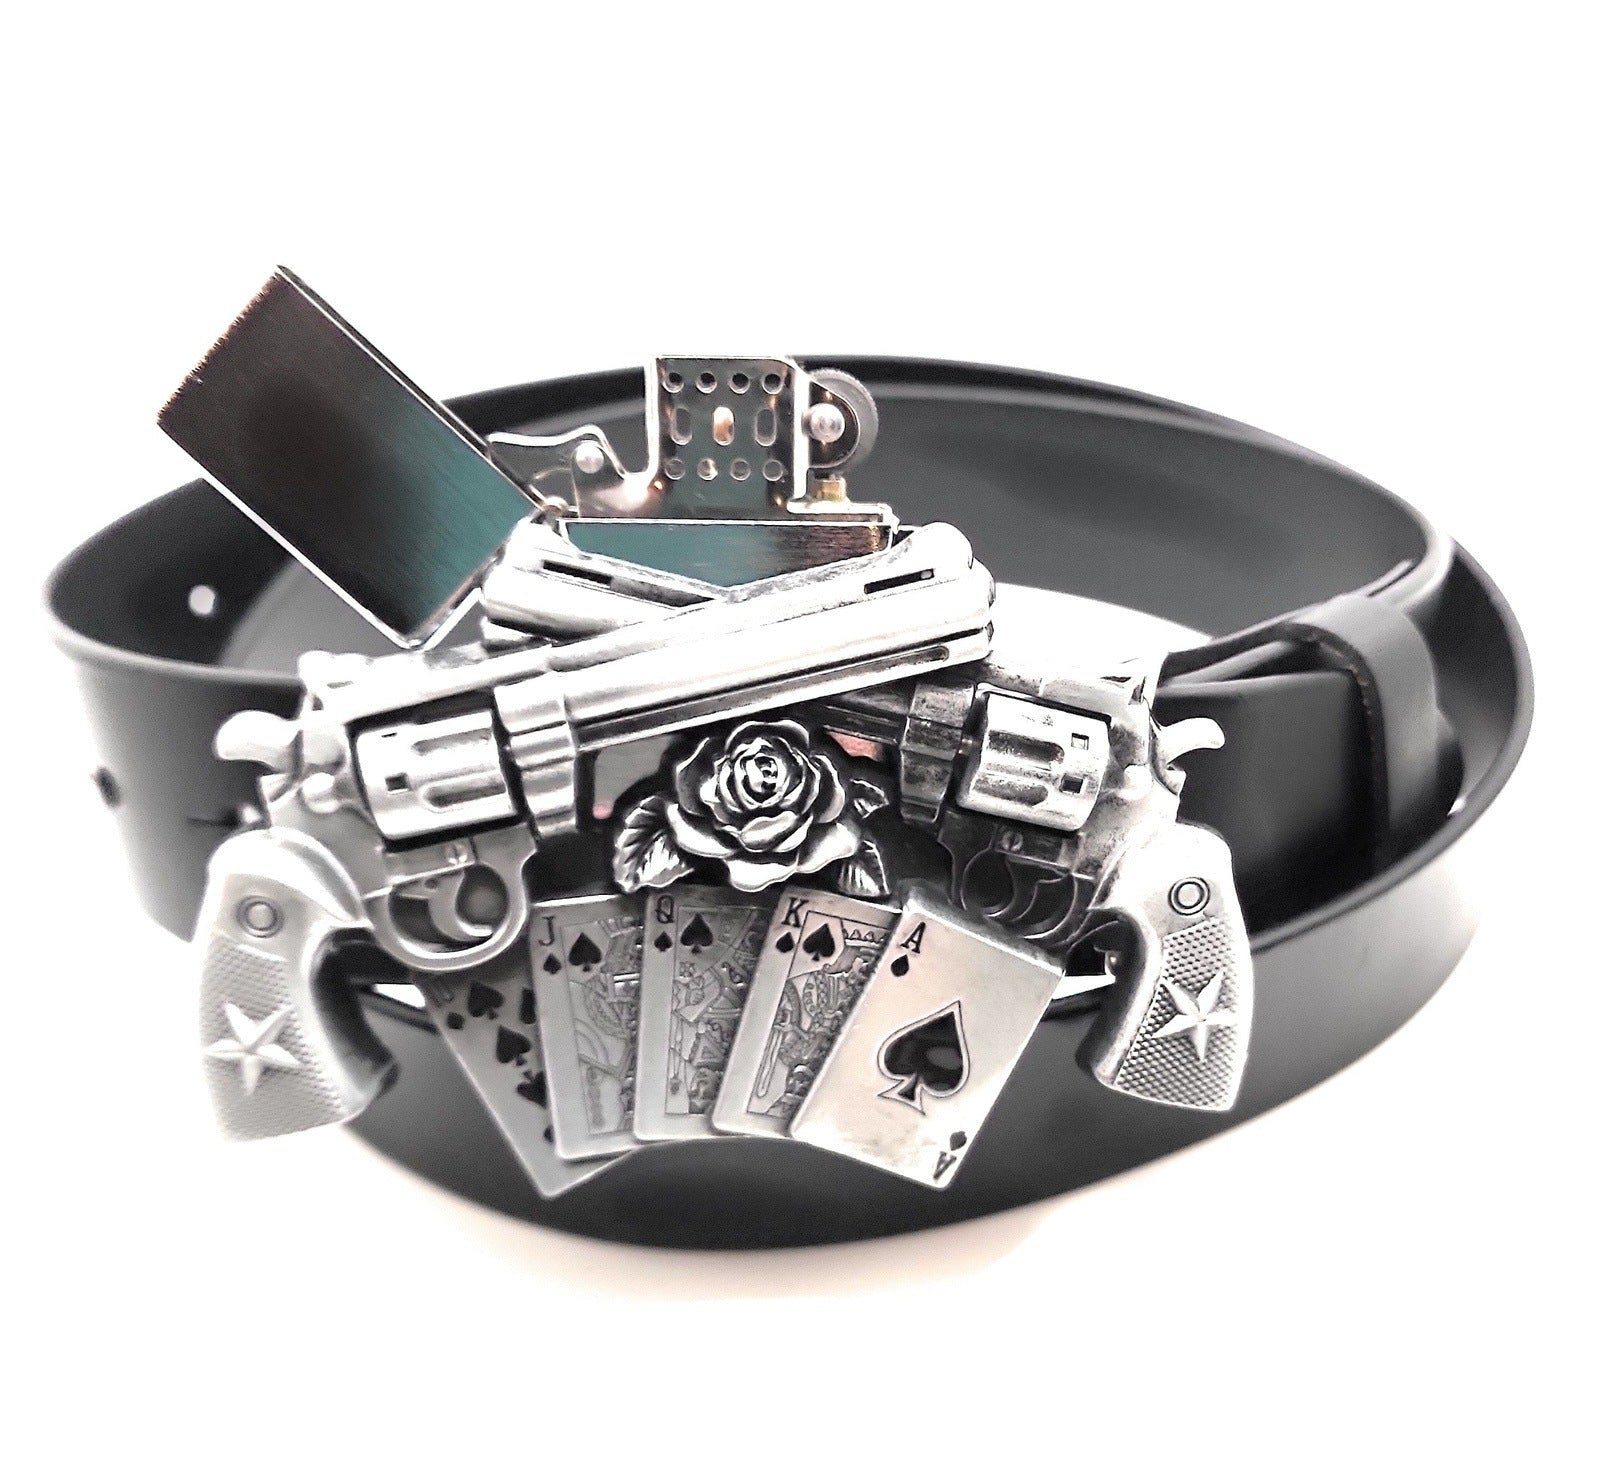 Spinning Revolvers Lighter Belt Buckle and Premium Leather Belt shop.AxeDr.com Buckles with Belt, Genuine Leather